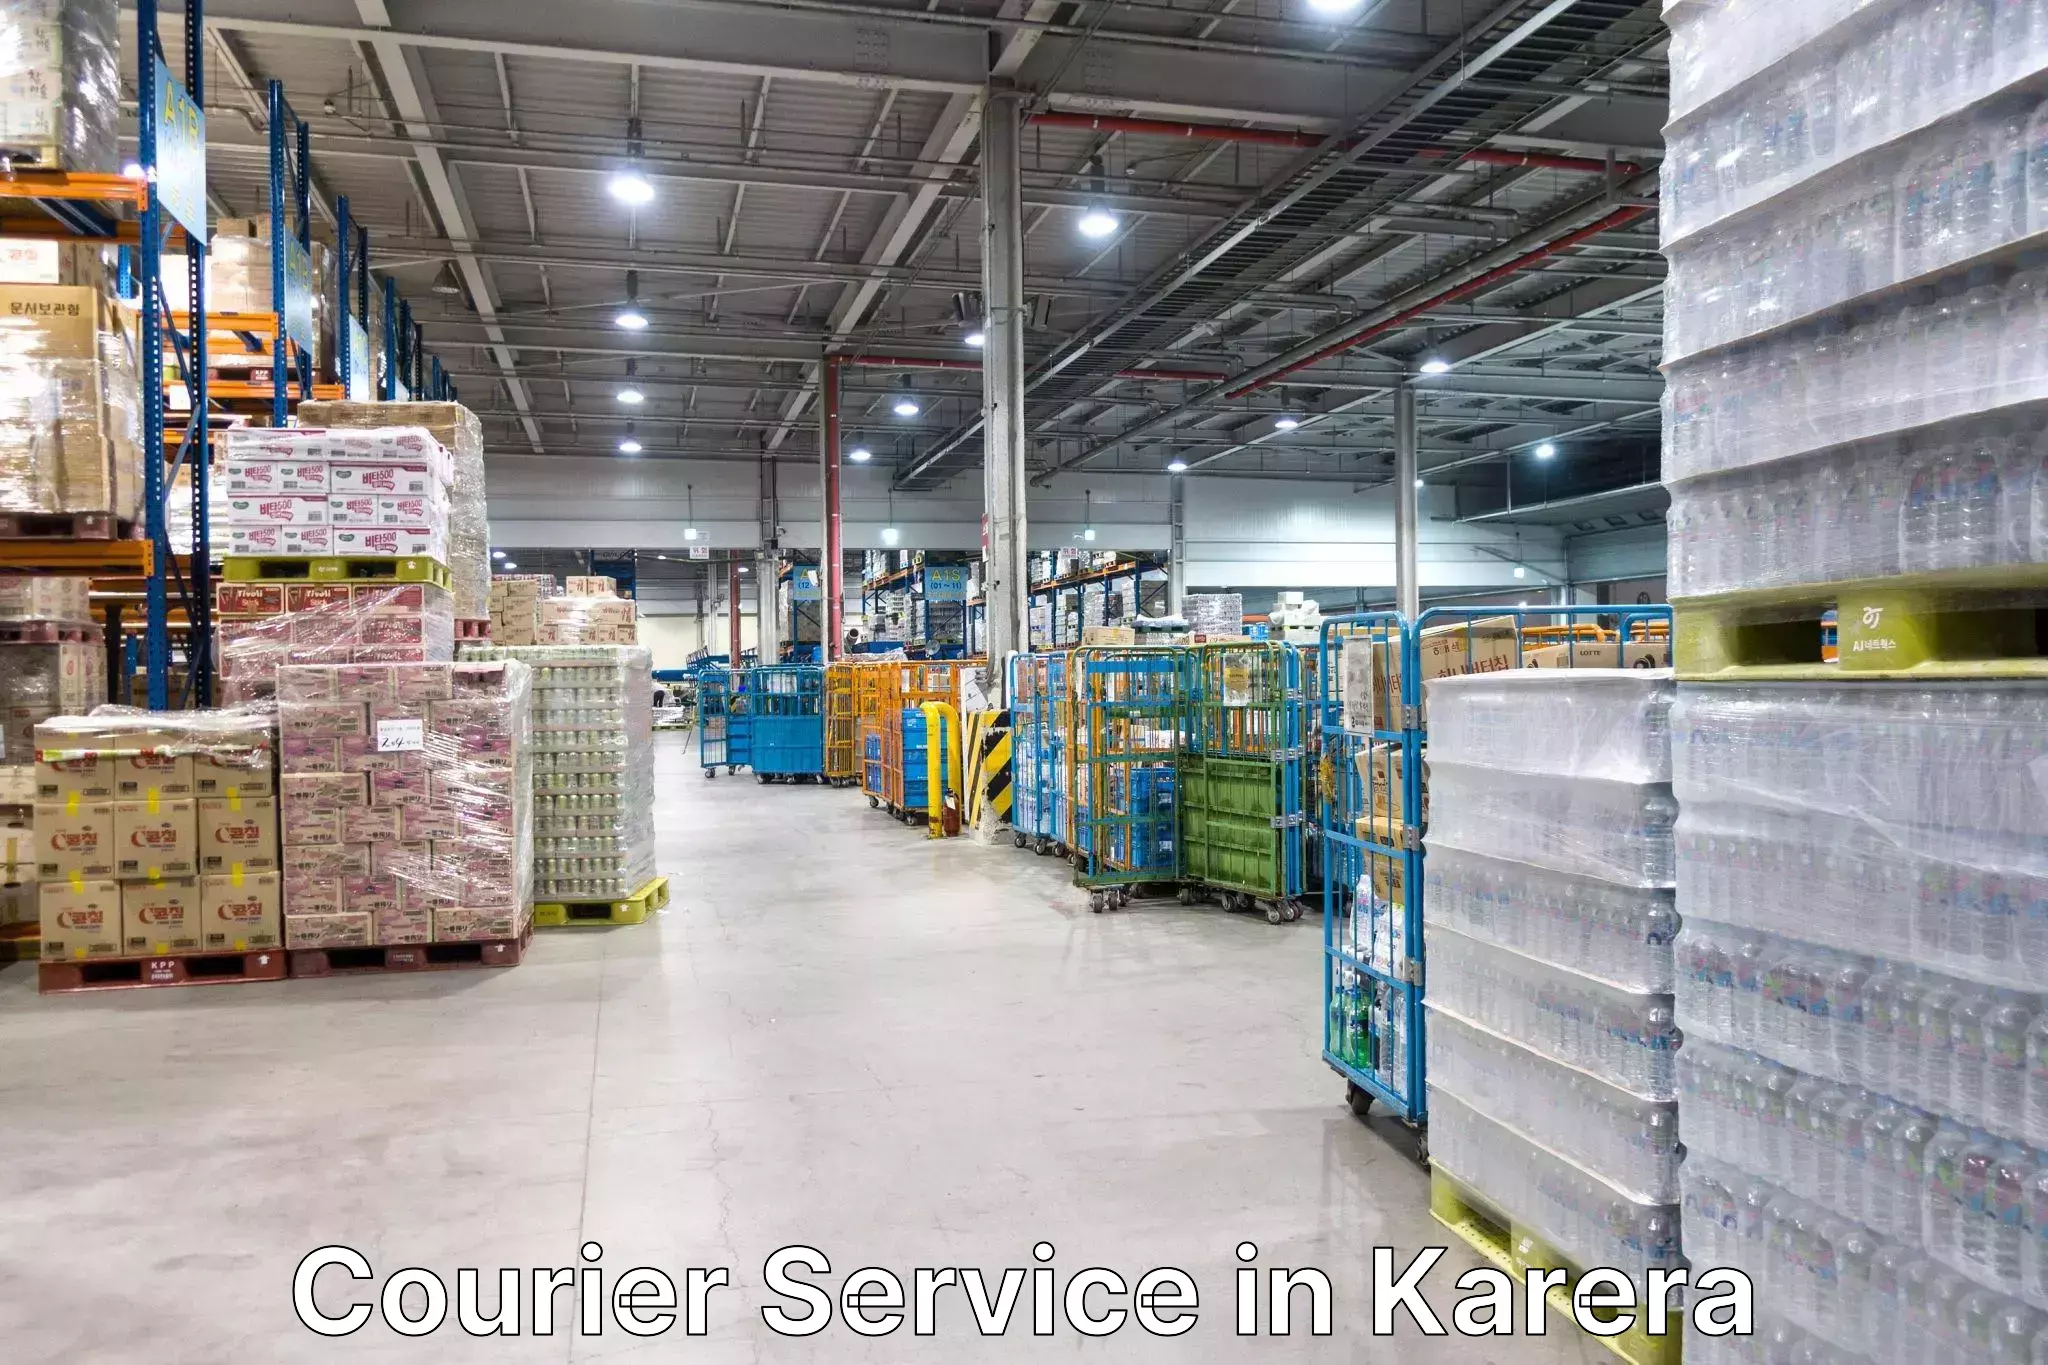 Specialized shipment handling in Karera